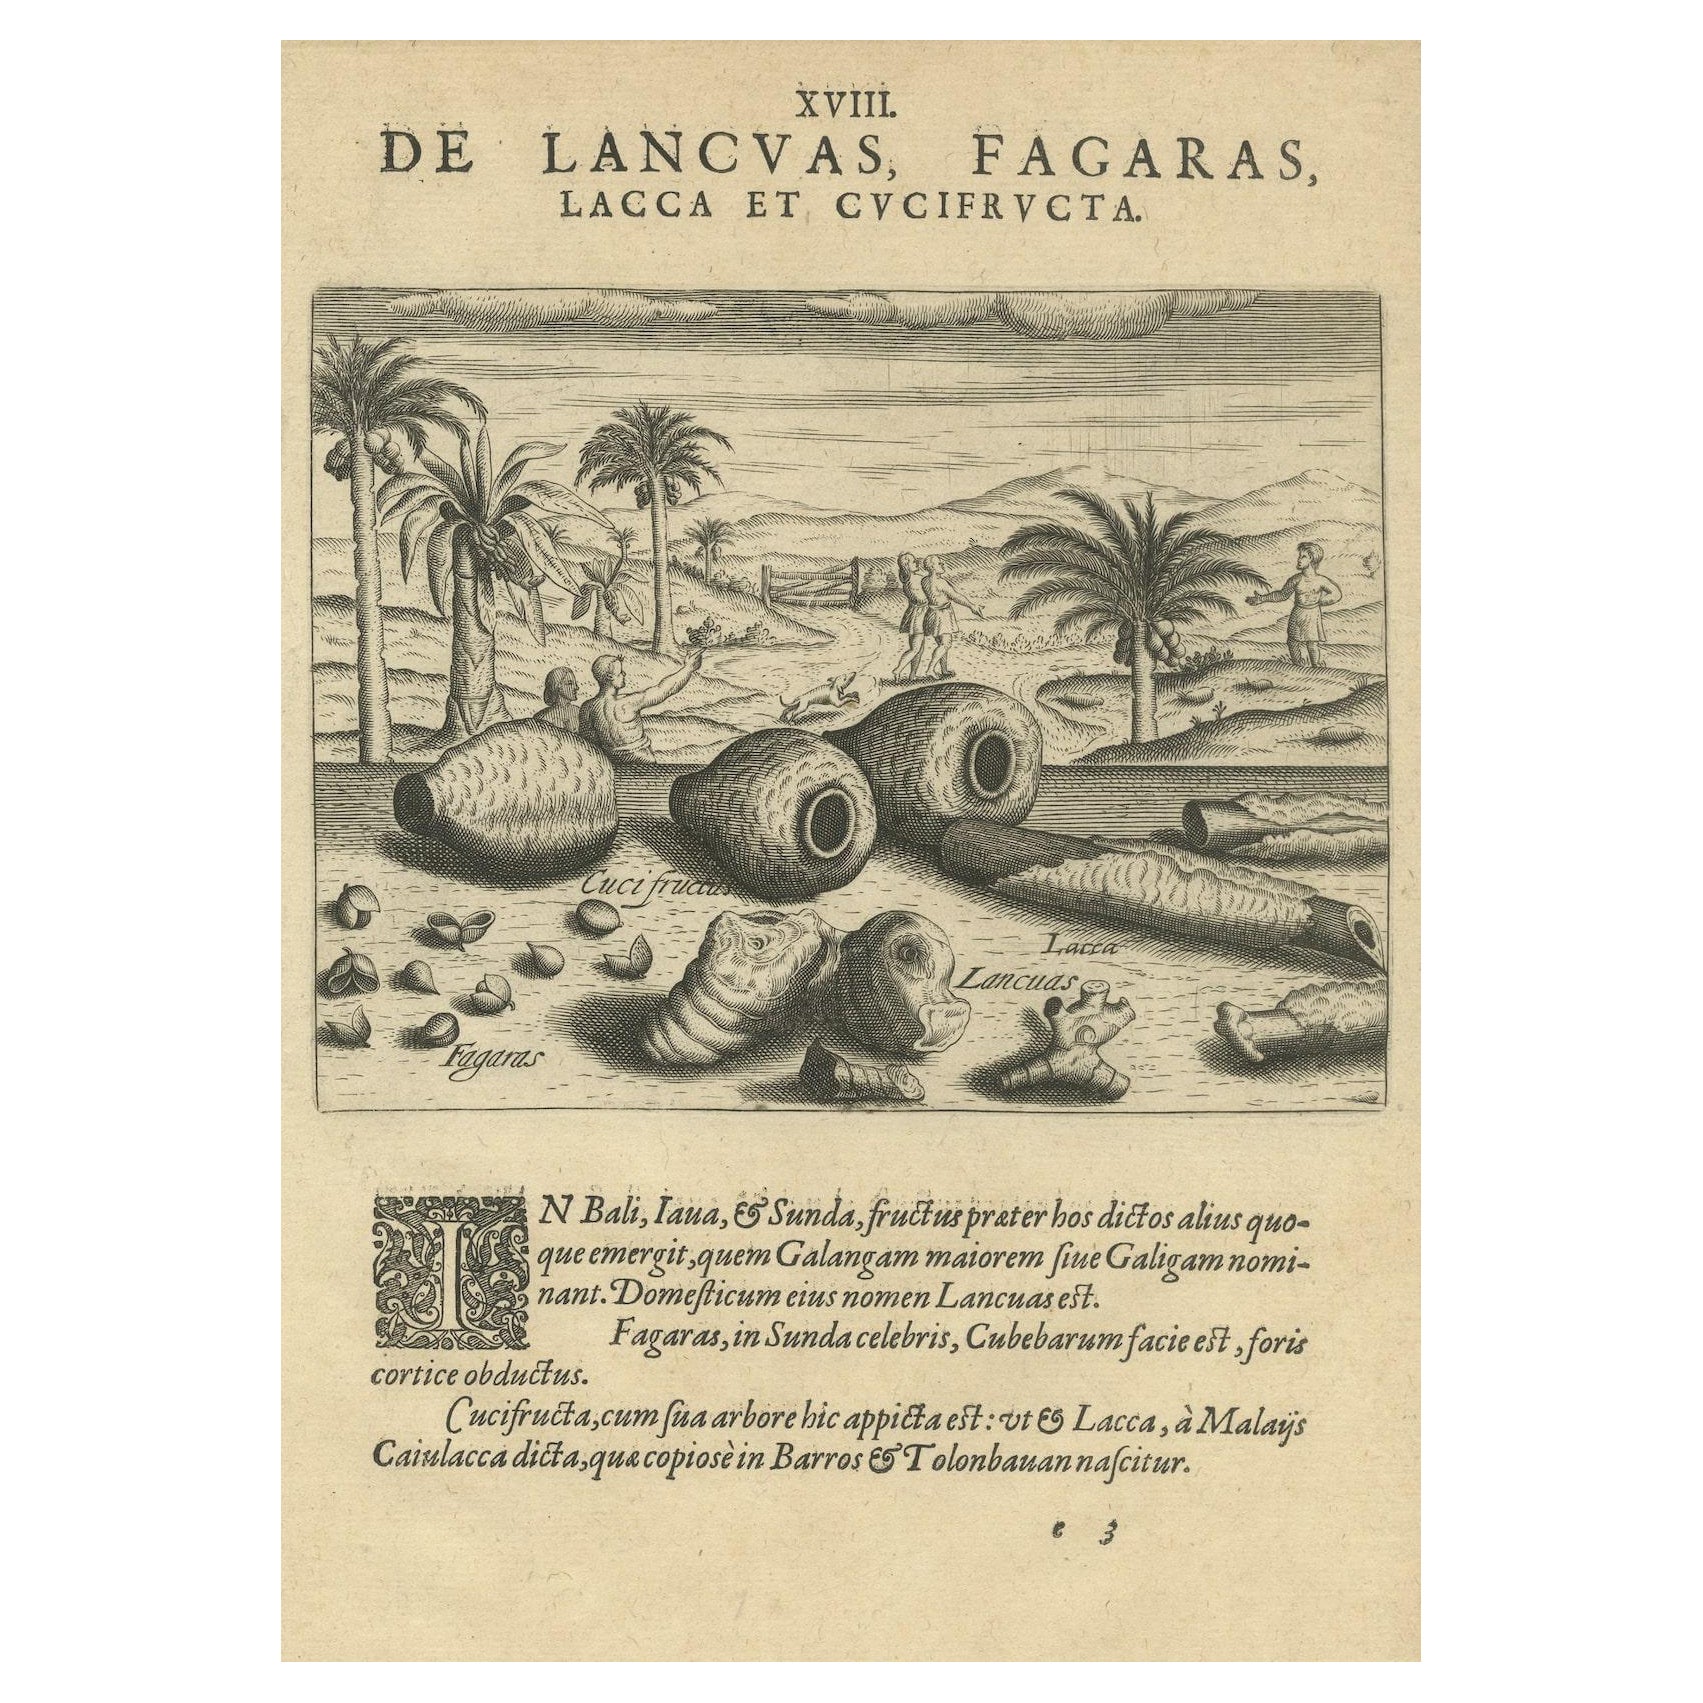 Treasures of the Tropics: Lac, Lancas, and Fagaras in De Bry's 1601 Engraving